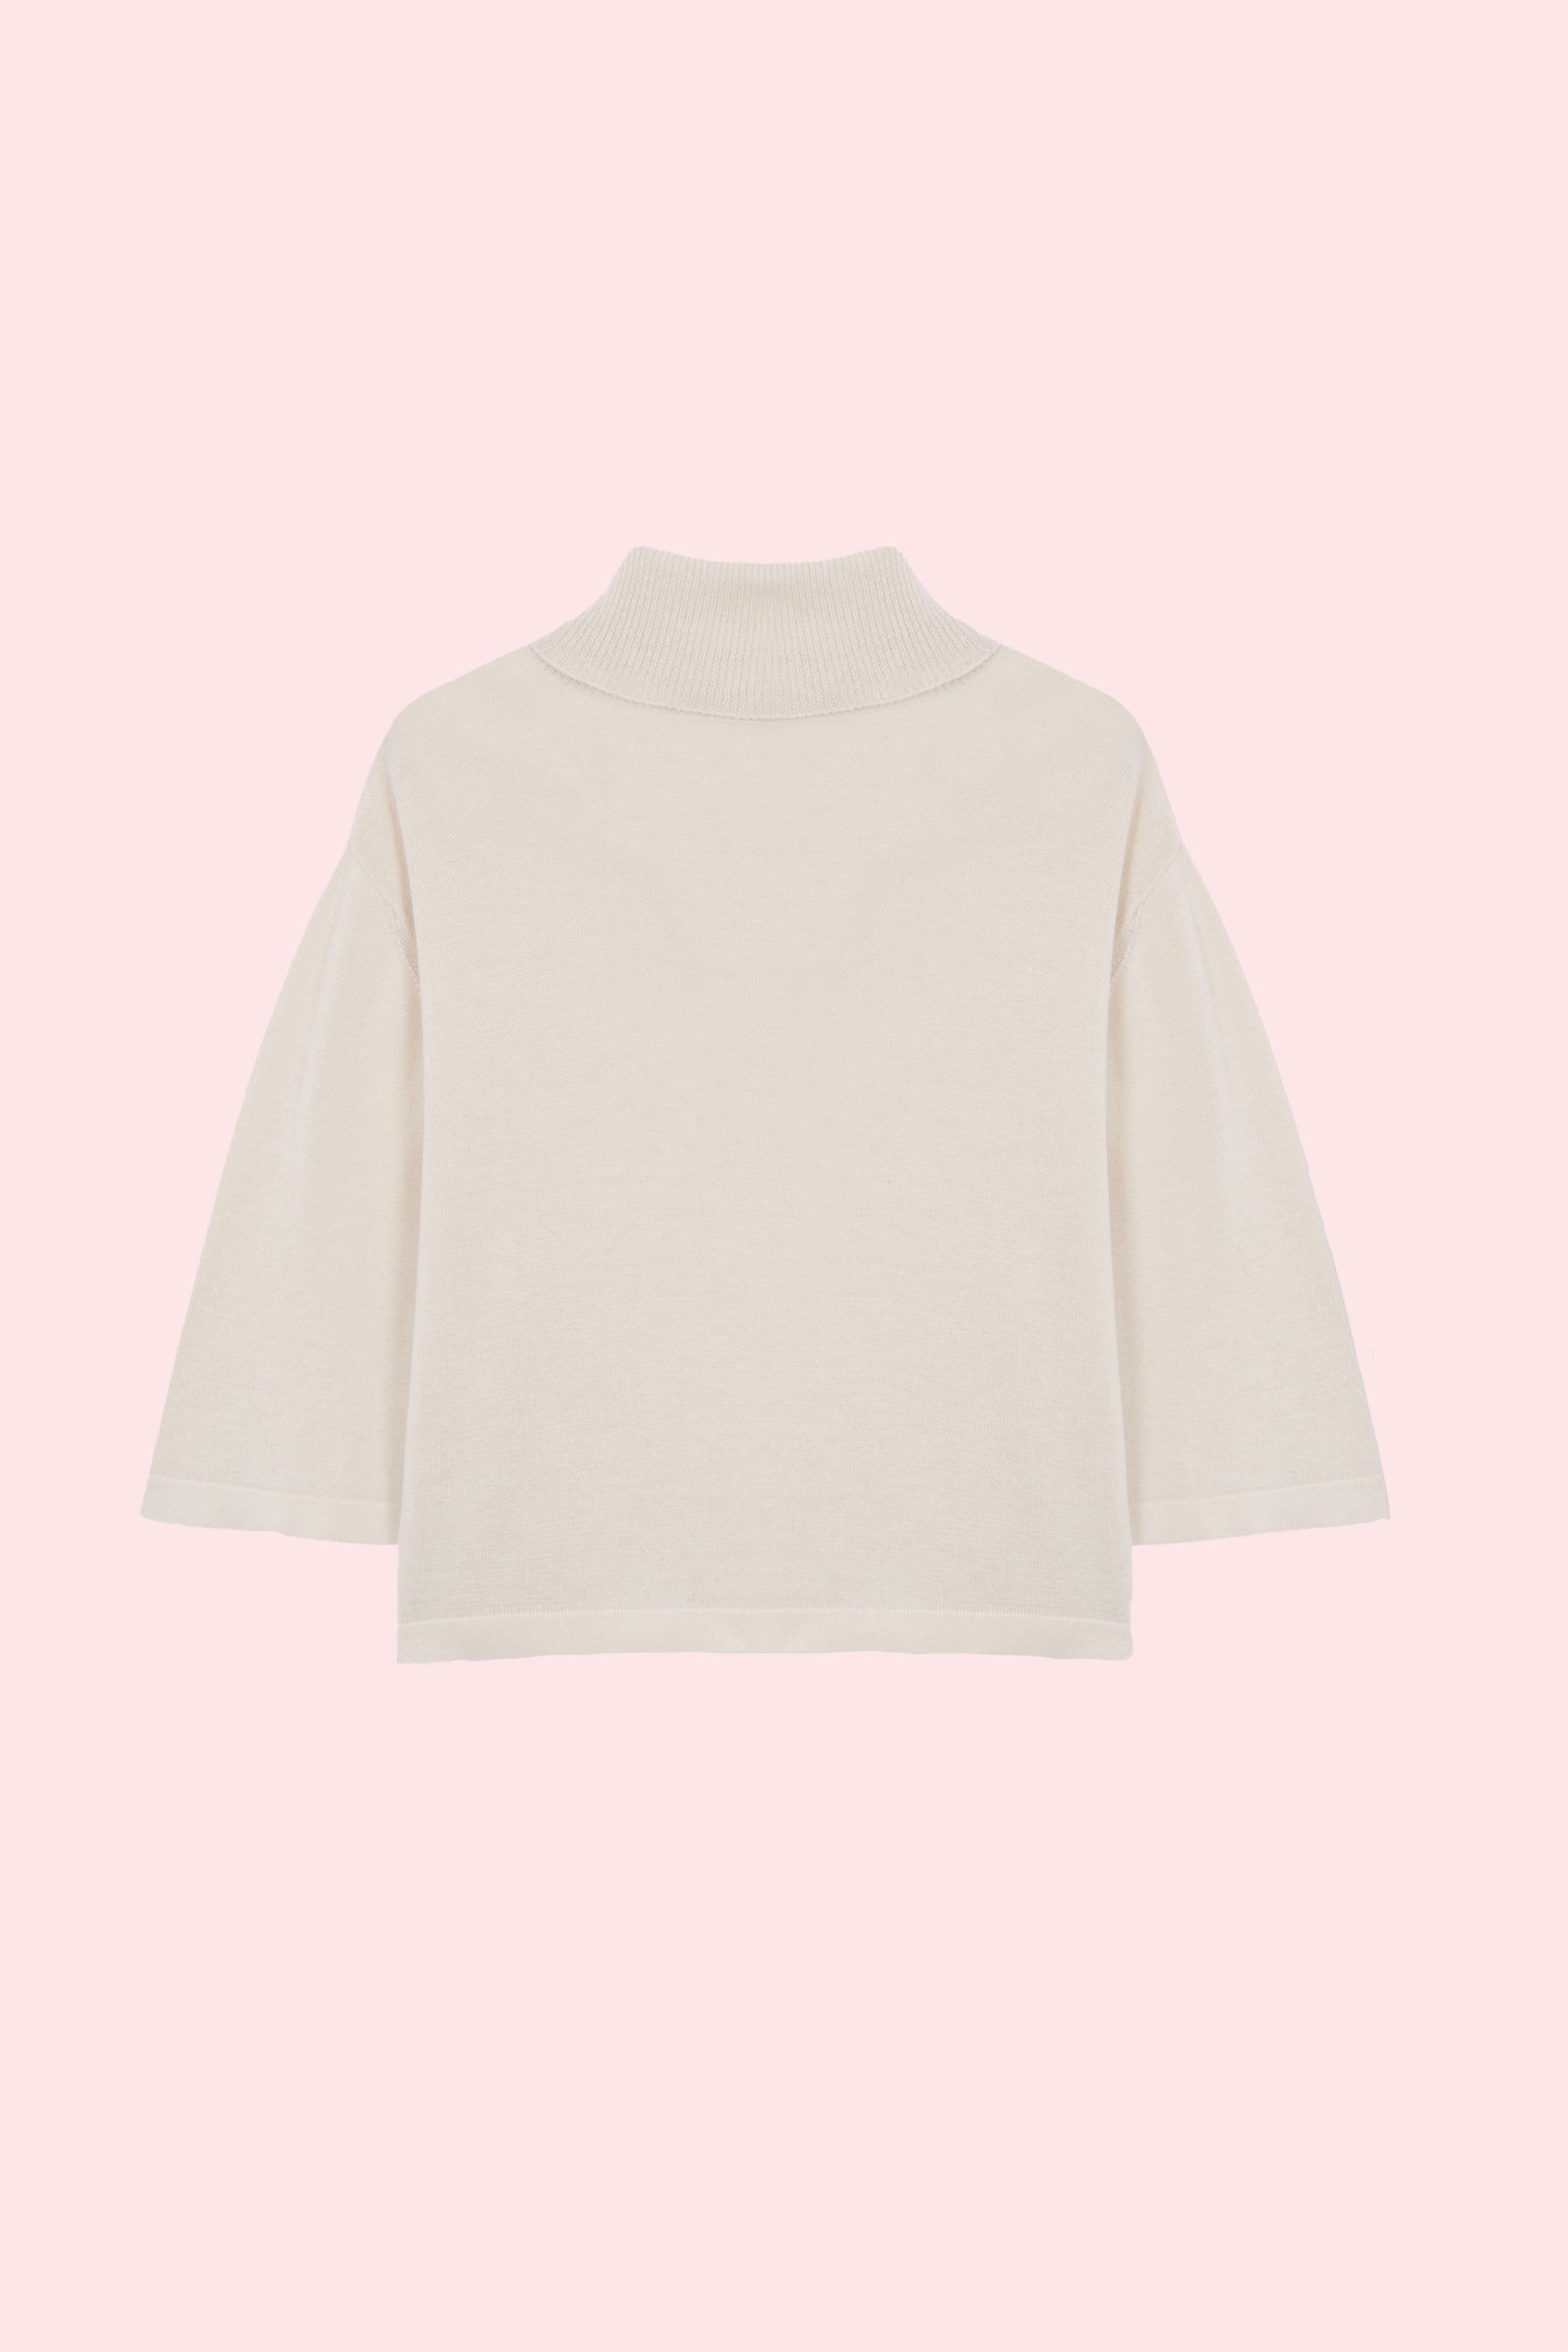 Cordera cotton & cashmere turtleneck sweater natural product back